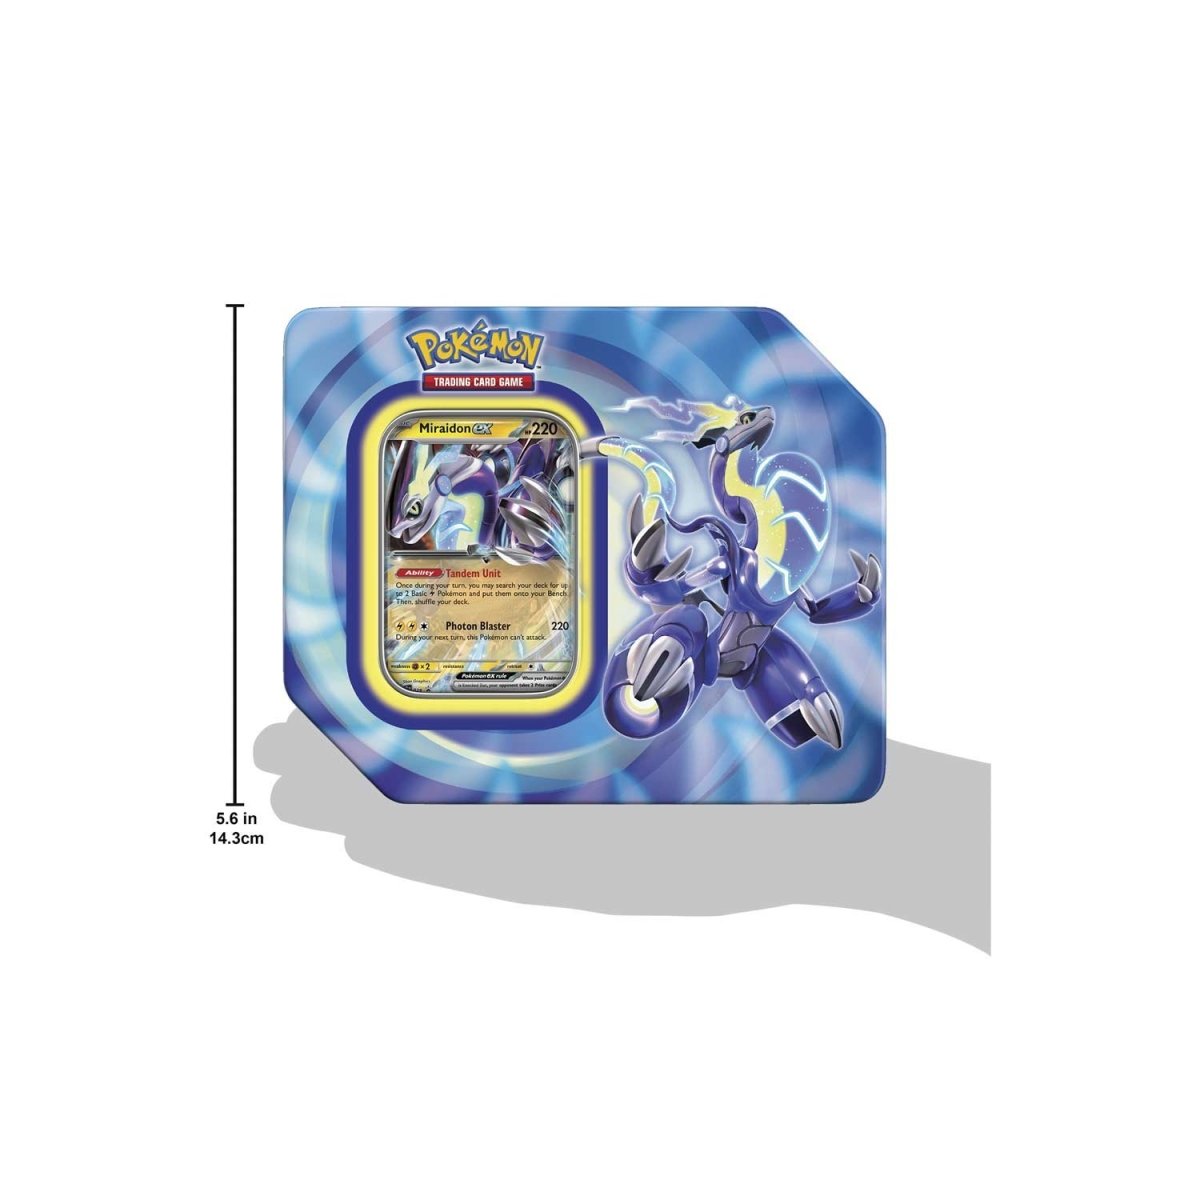 Pokemon Trading Card Game Paldea Legends Miraidon ex Tin 4 Booster